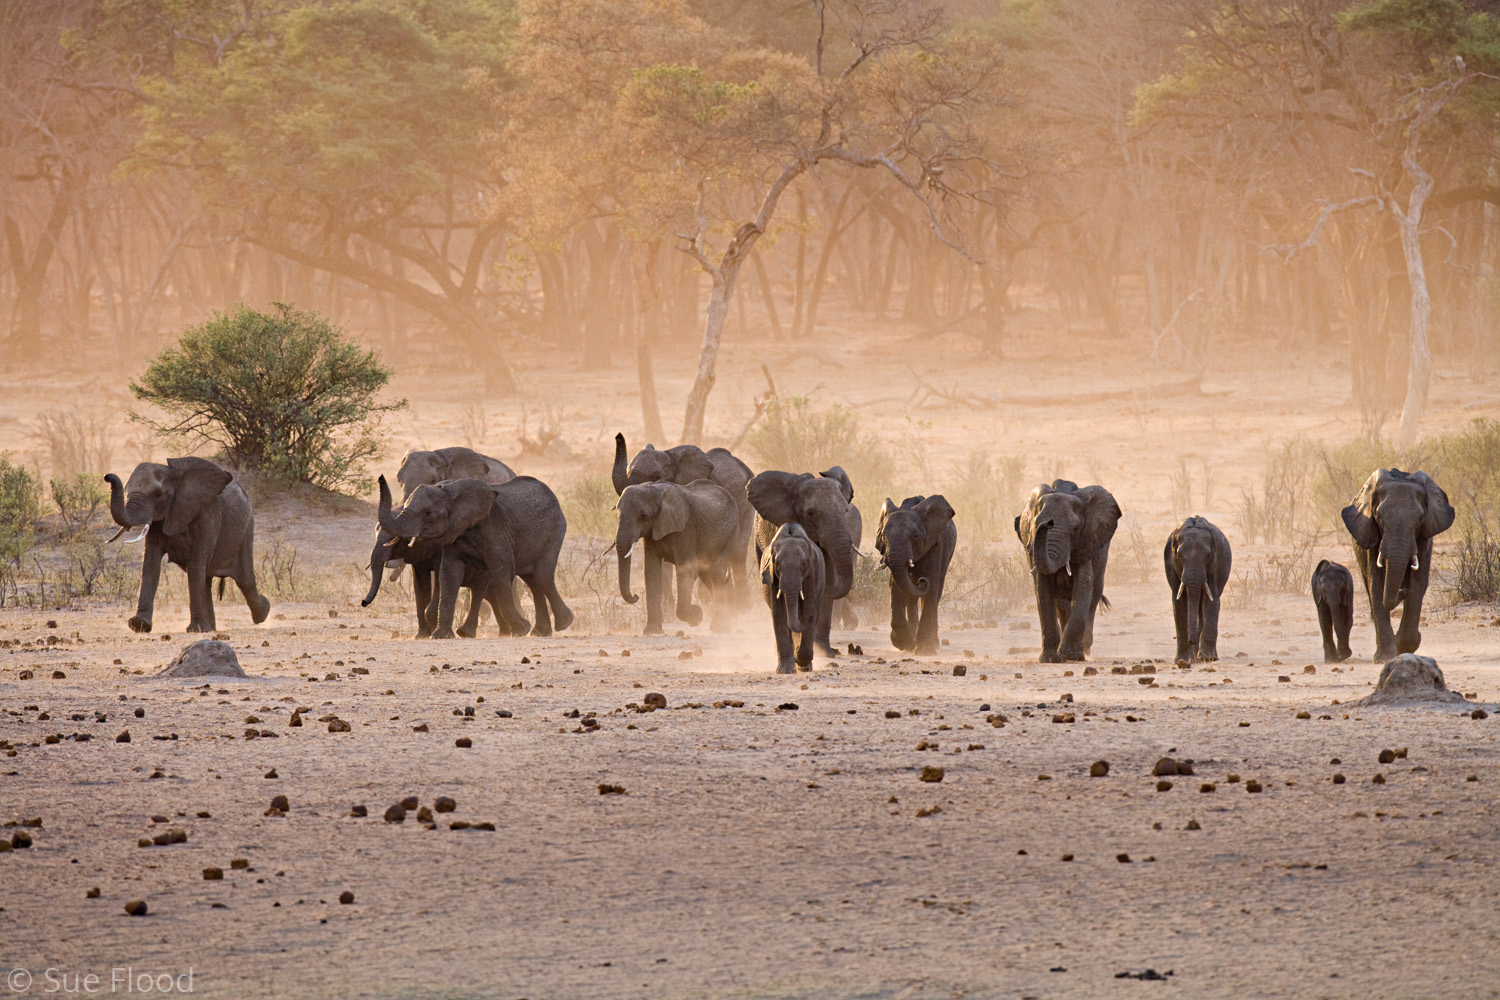 Elephants in dust storm, Hwange National Park, Zimbabwe. Royal Photographic Society Silver Medal 2008